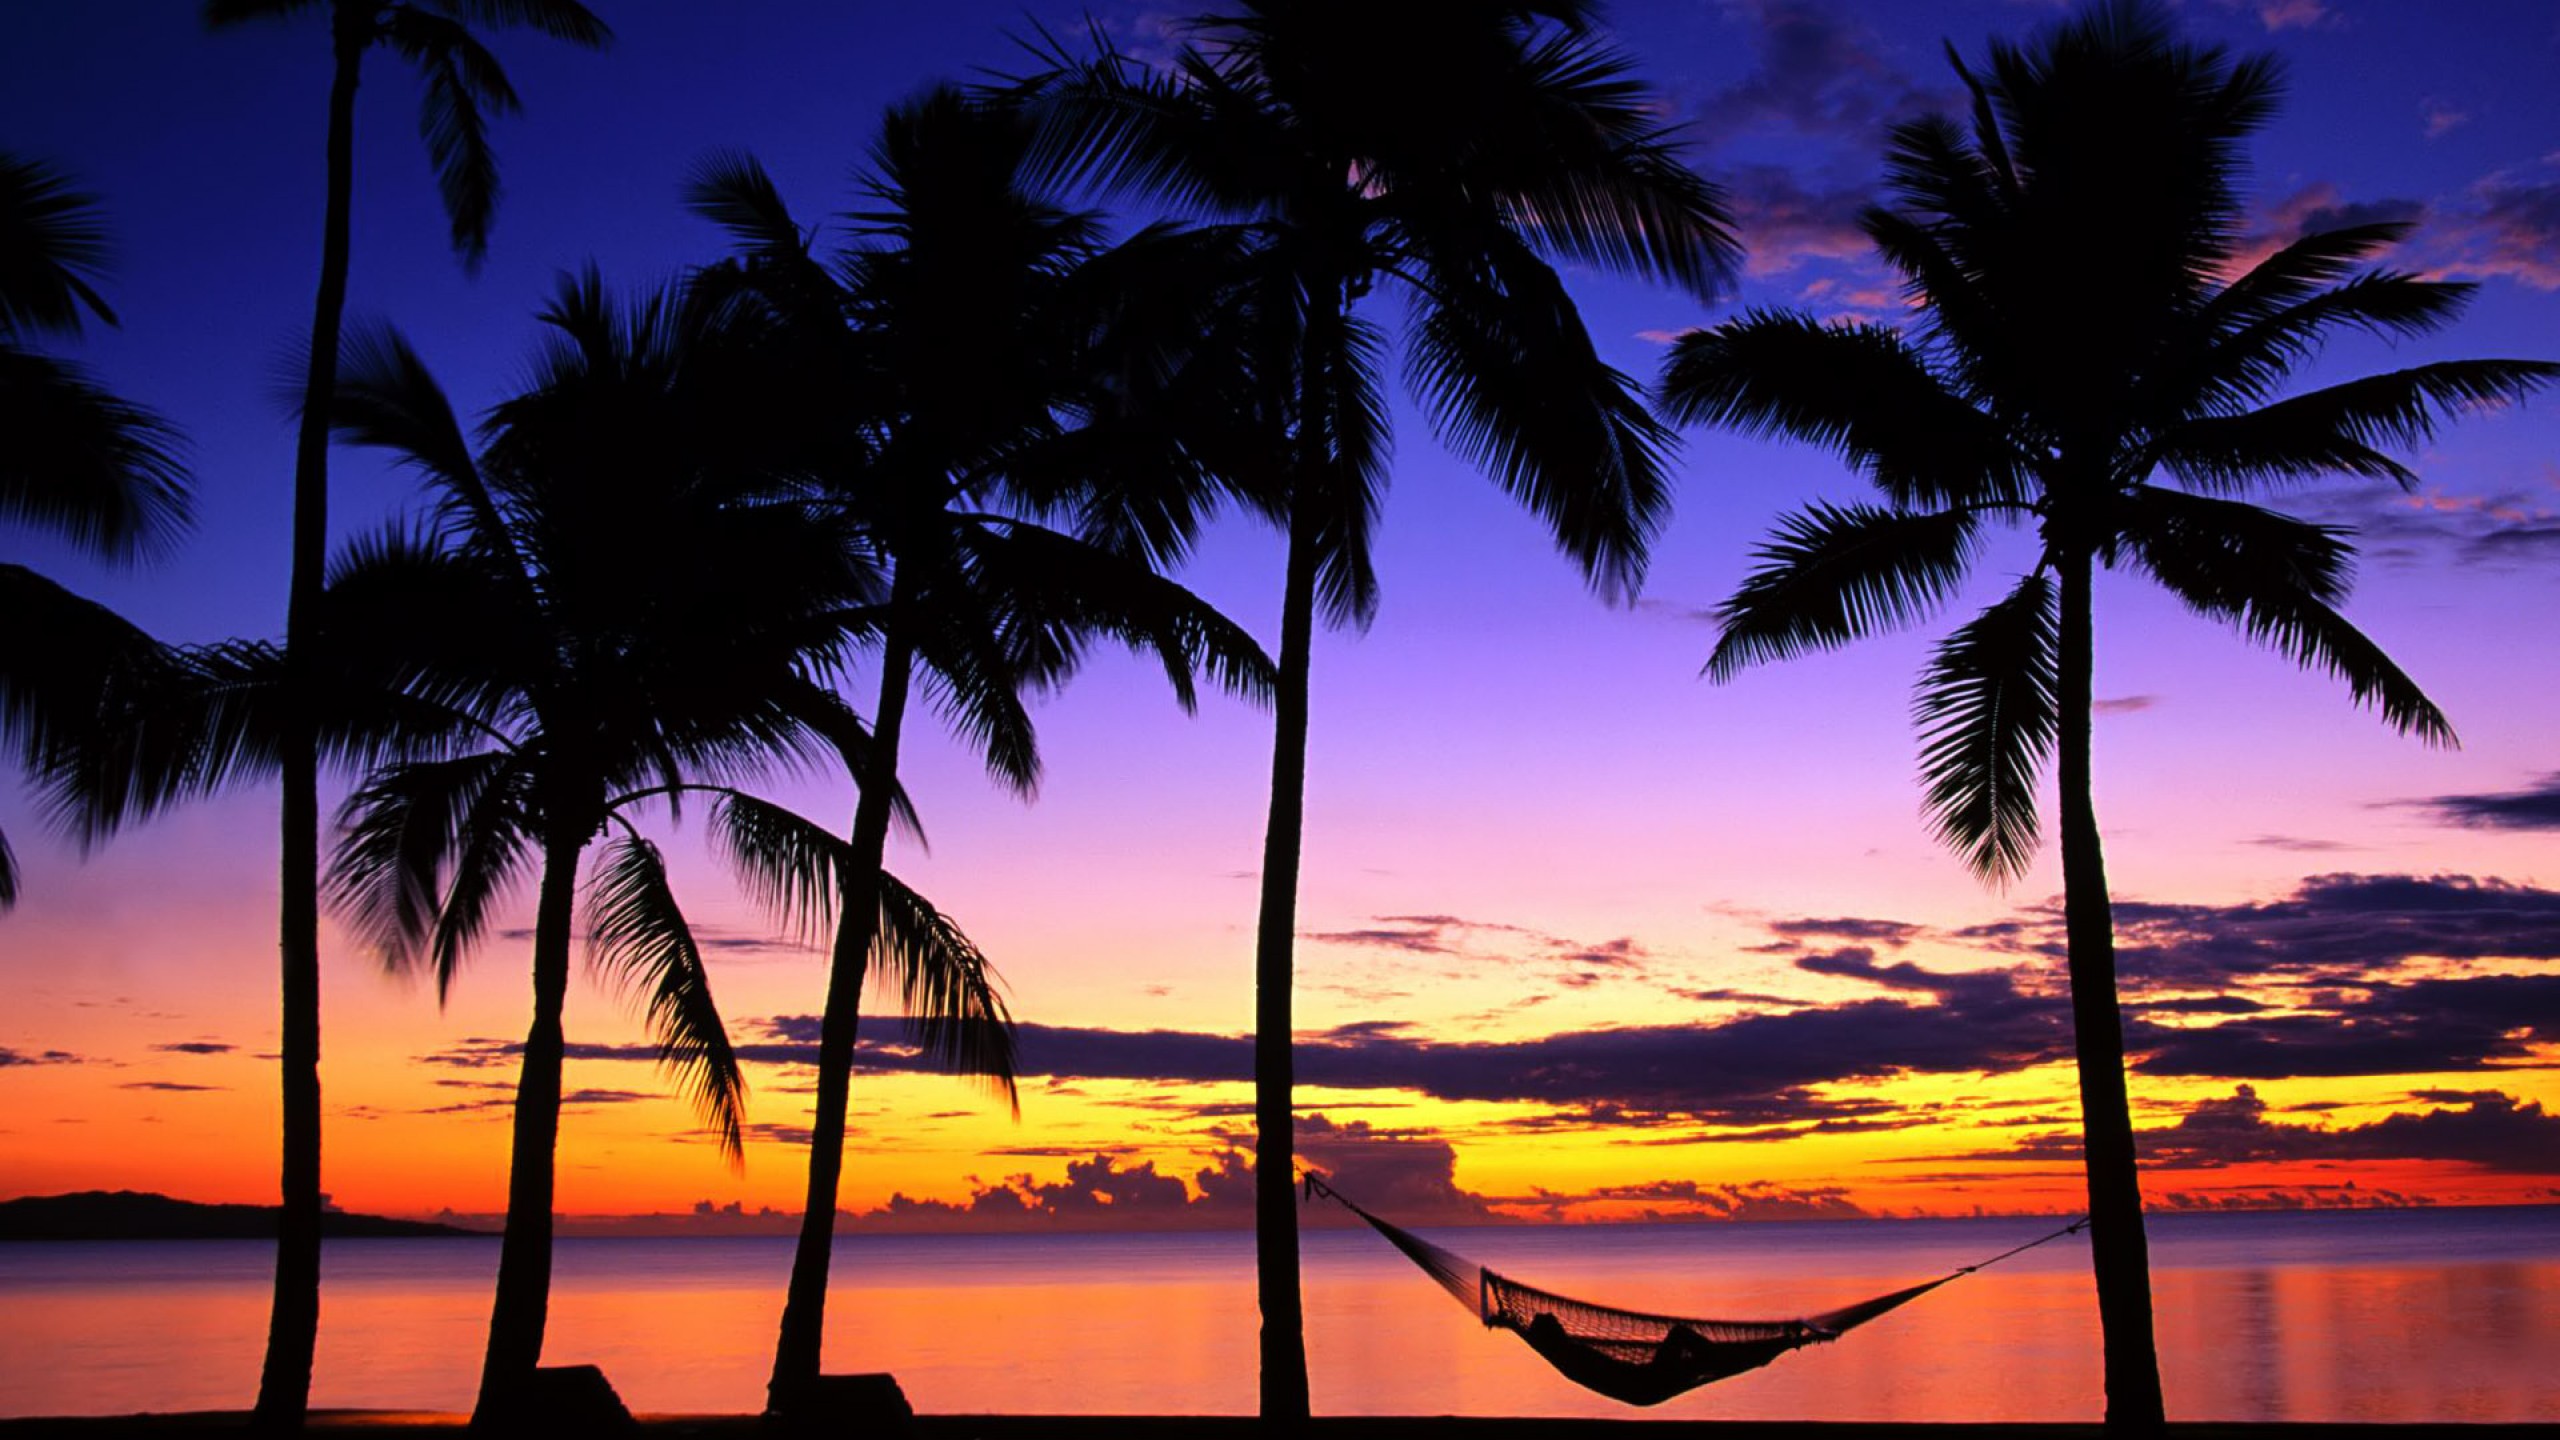 Tropical Sunset | Tropical Sunset | MISC | Pinterest